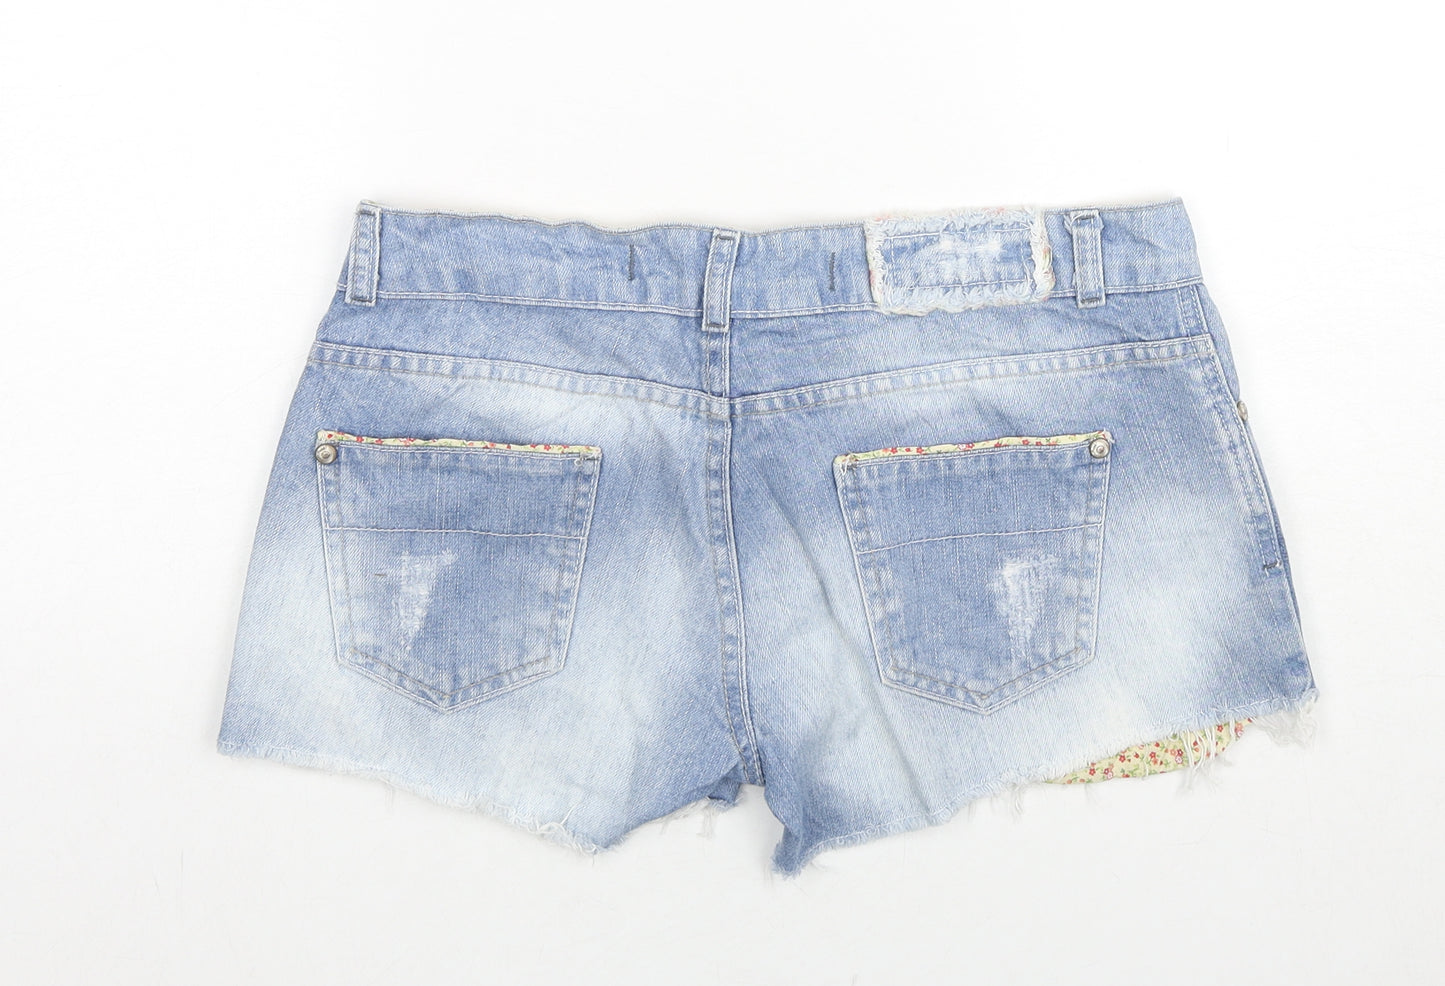 Clockhouse Womens Blue Cotton Cut-Off Shorts Size 12 L3 in Regular Zip